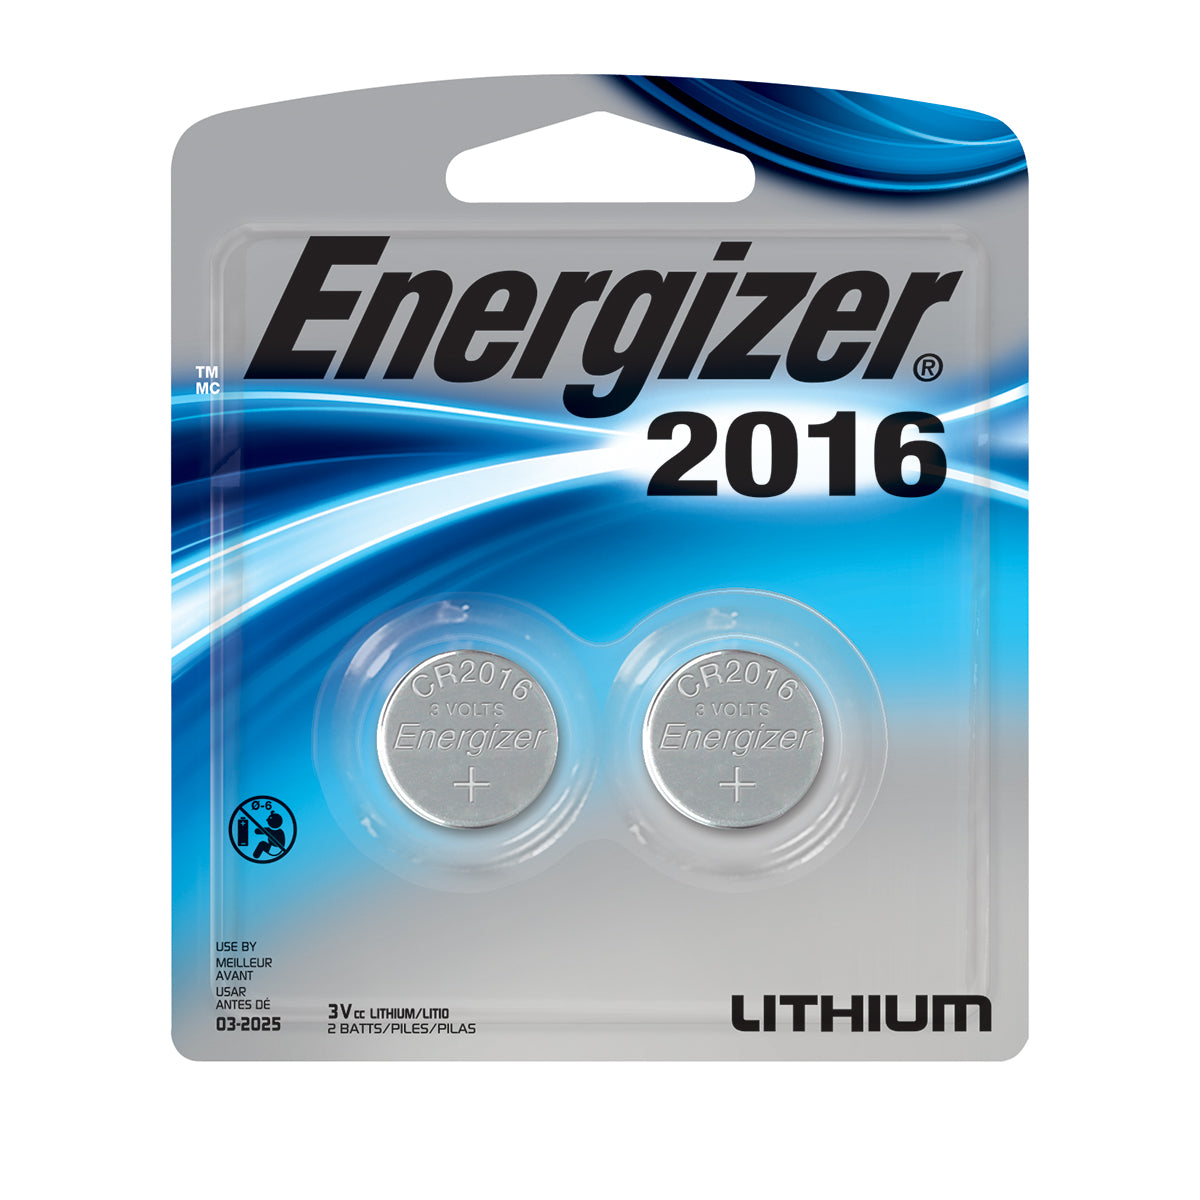 Energizer 2016 Coin Lithium Batteries 2 ct